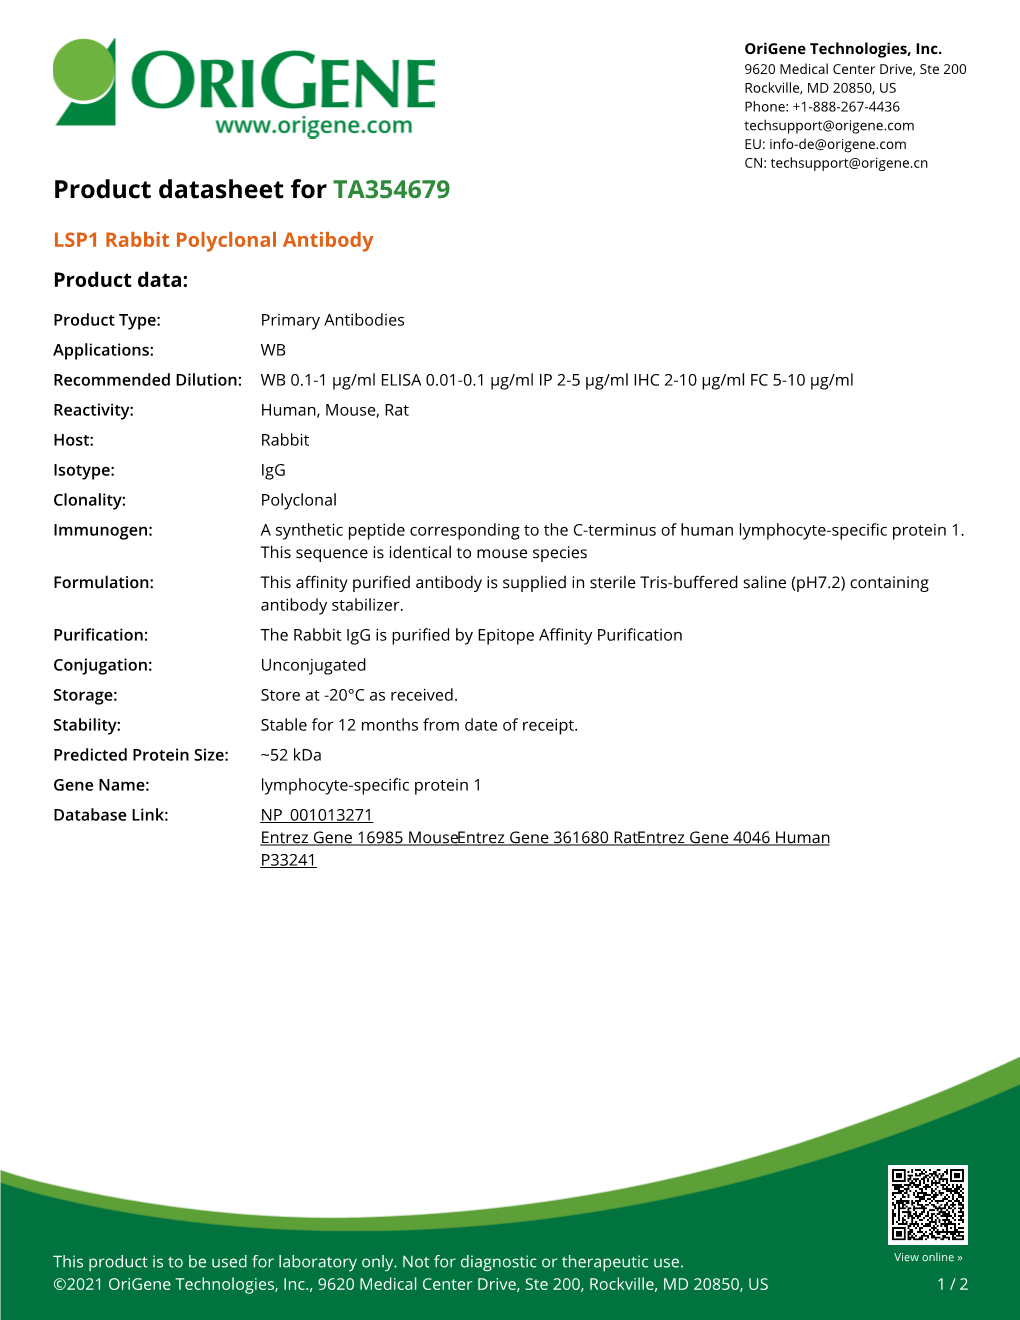 LSP1 Rabbit Polyclonal Antibody – TA354679 | Origene